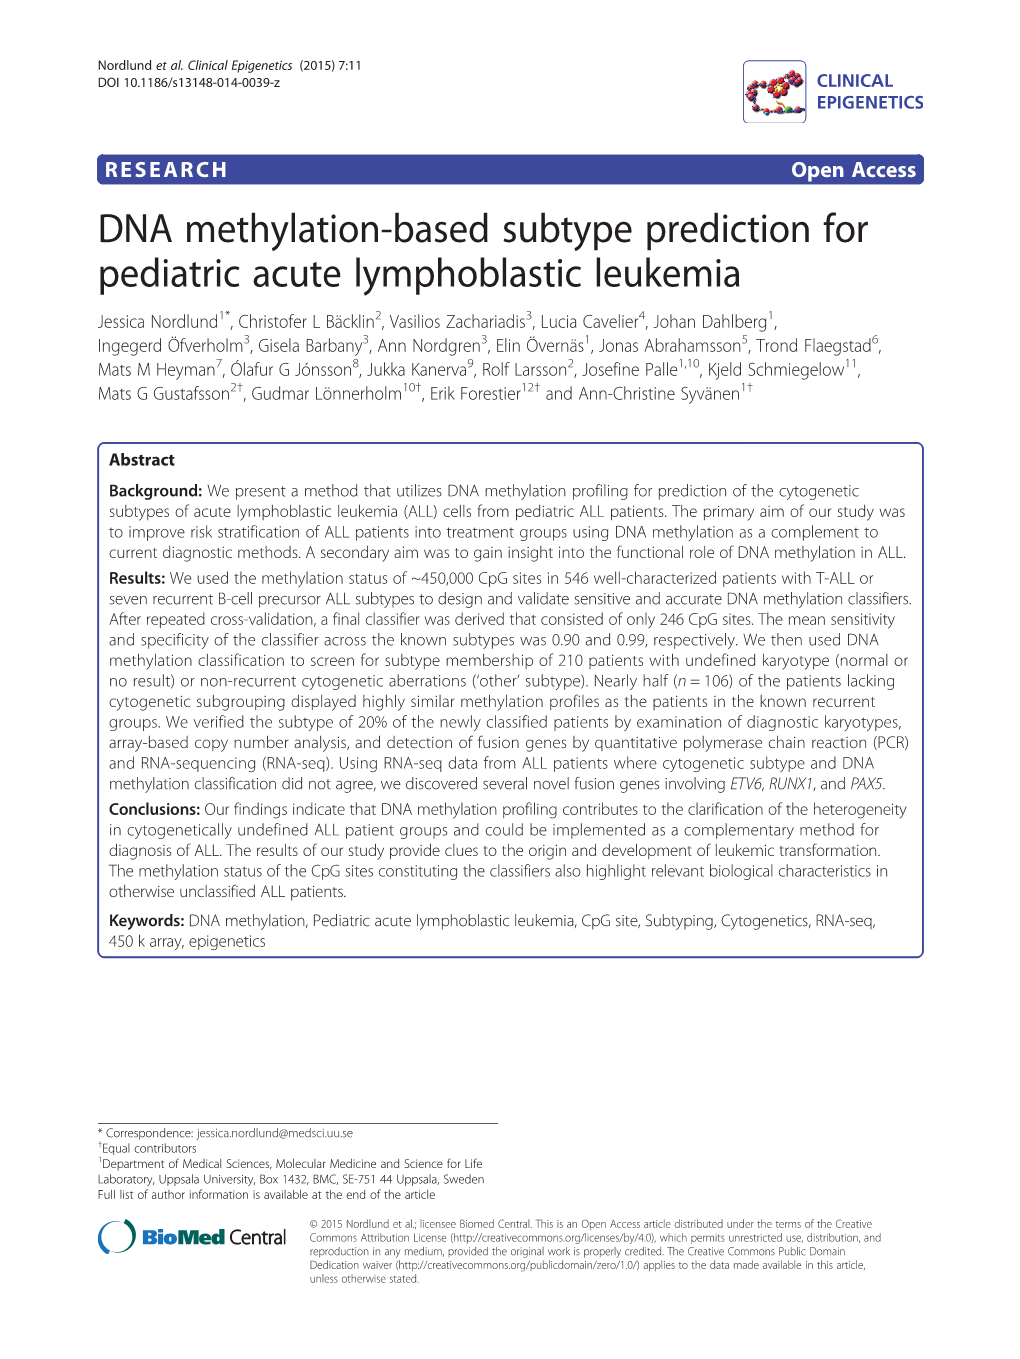 DNA Methylation-Based Subtype Prediction for Pediatric Acute